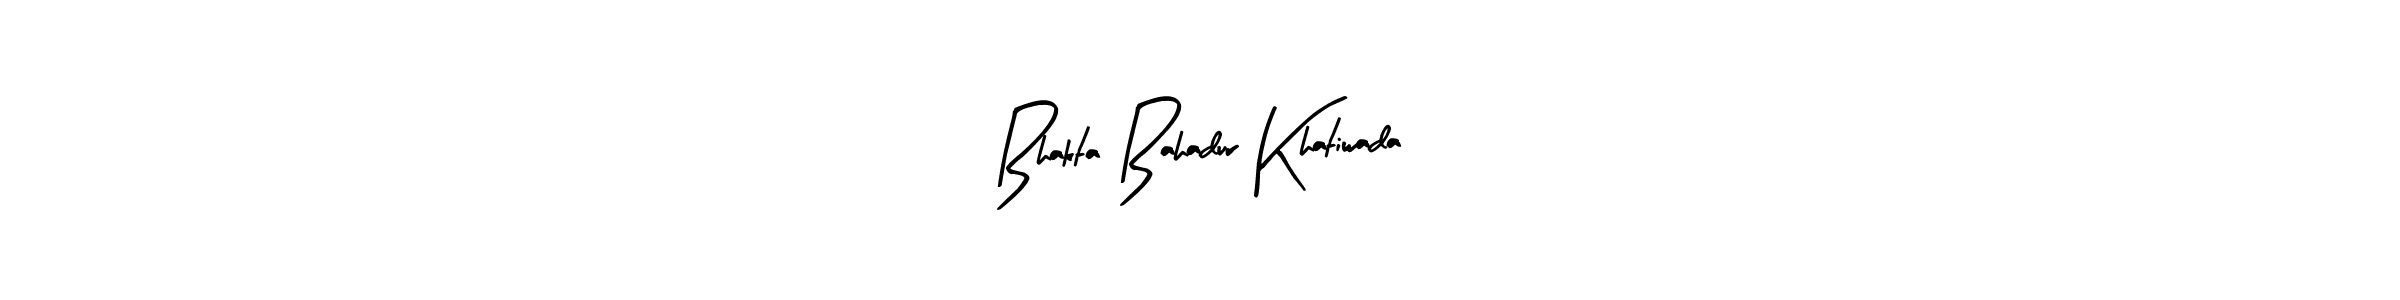 Use a signature maker to create a handwritten signature online. With this signature software, you can design (Arty Signature) your own signature for name Bhakta Bahadur Khatiwada. Bhakta Bahadur Khatiwada signature style 8 images and pictures png